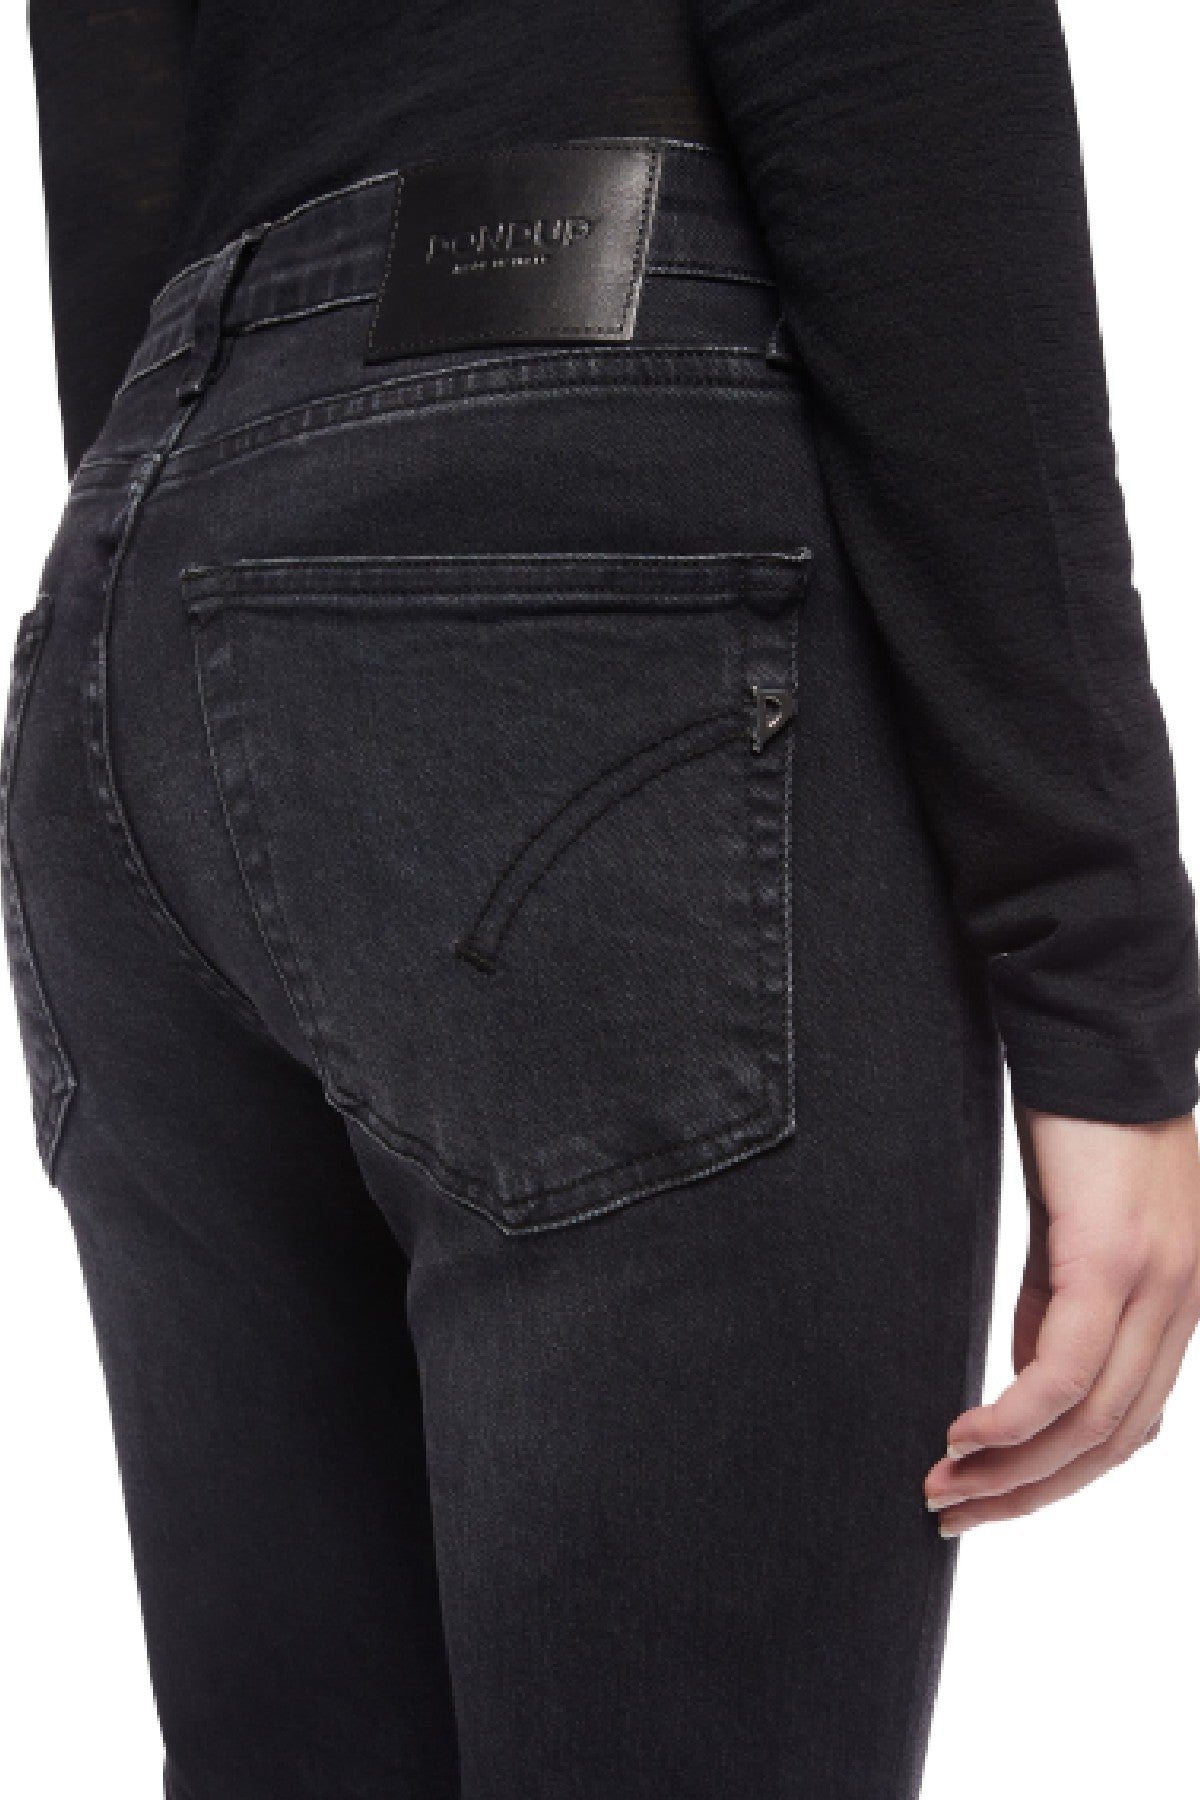 Iris Dondup Women's Jeans